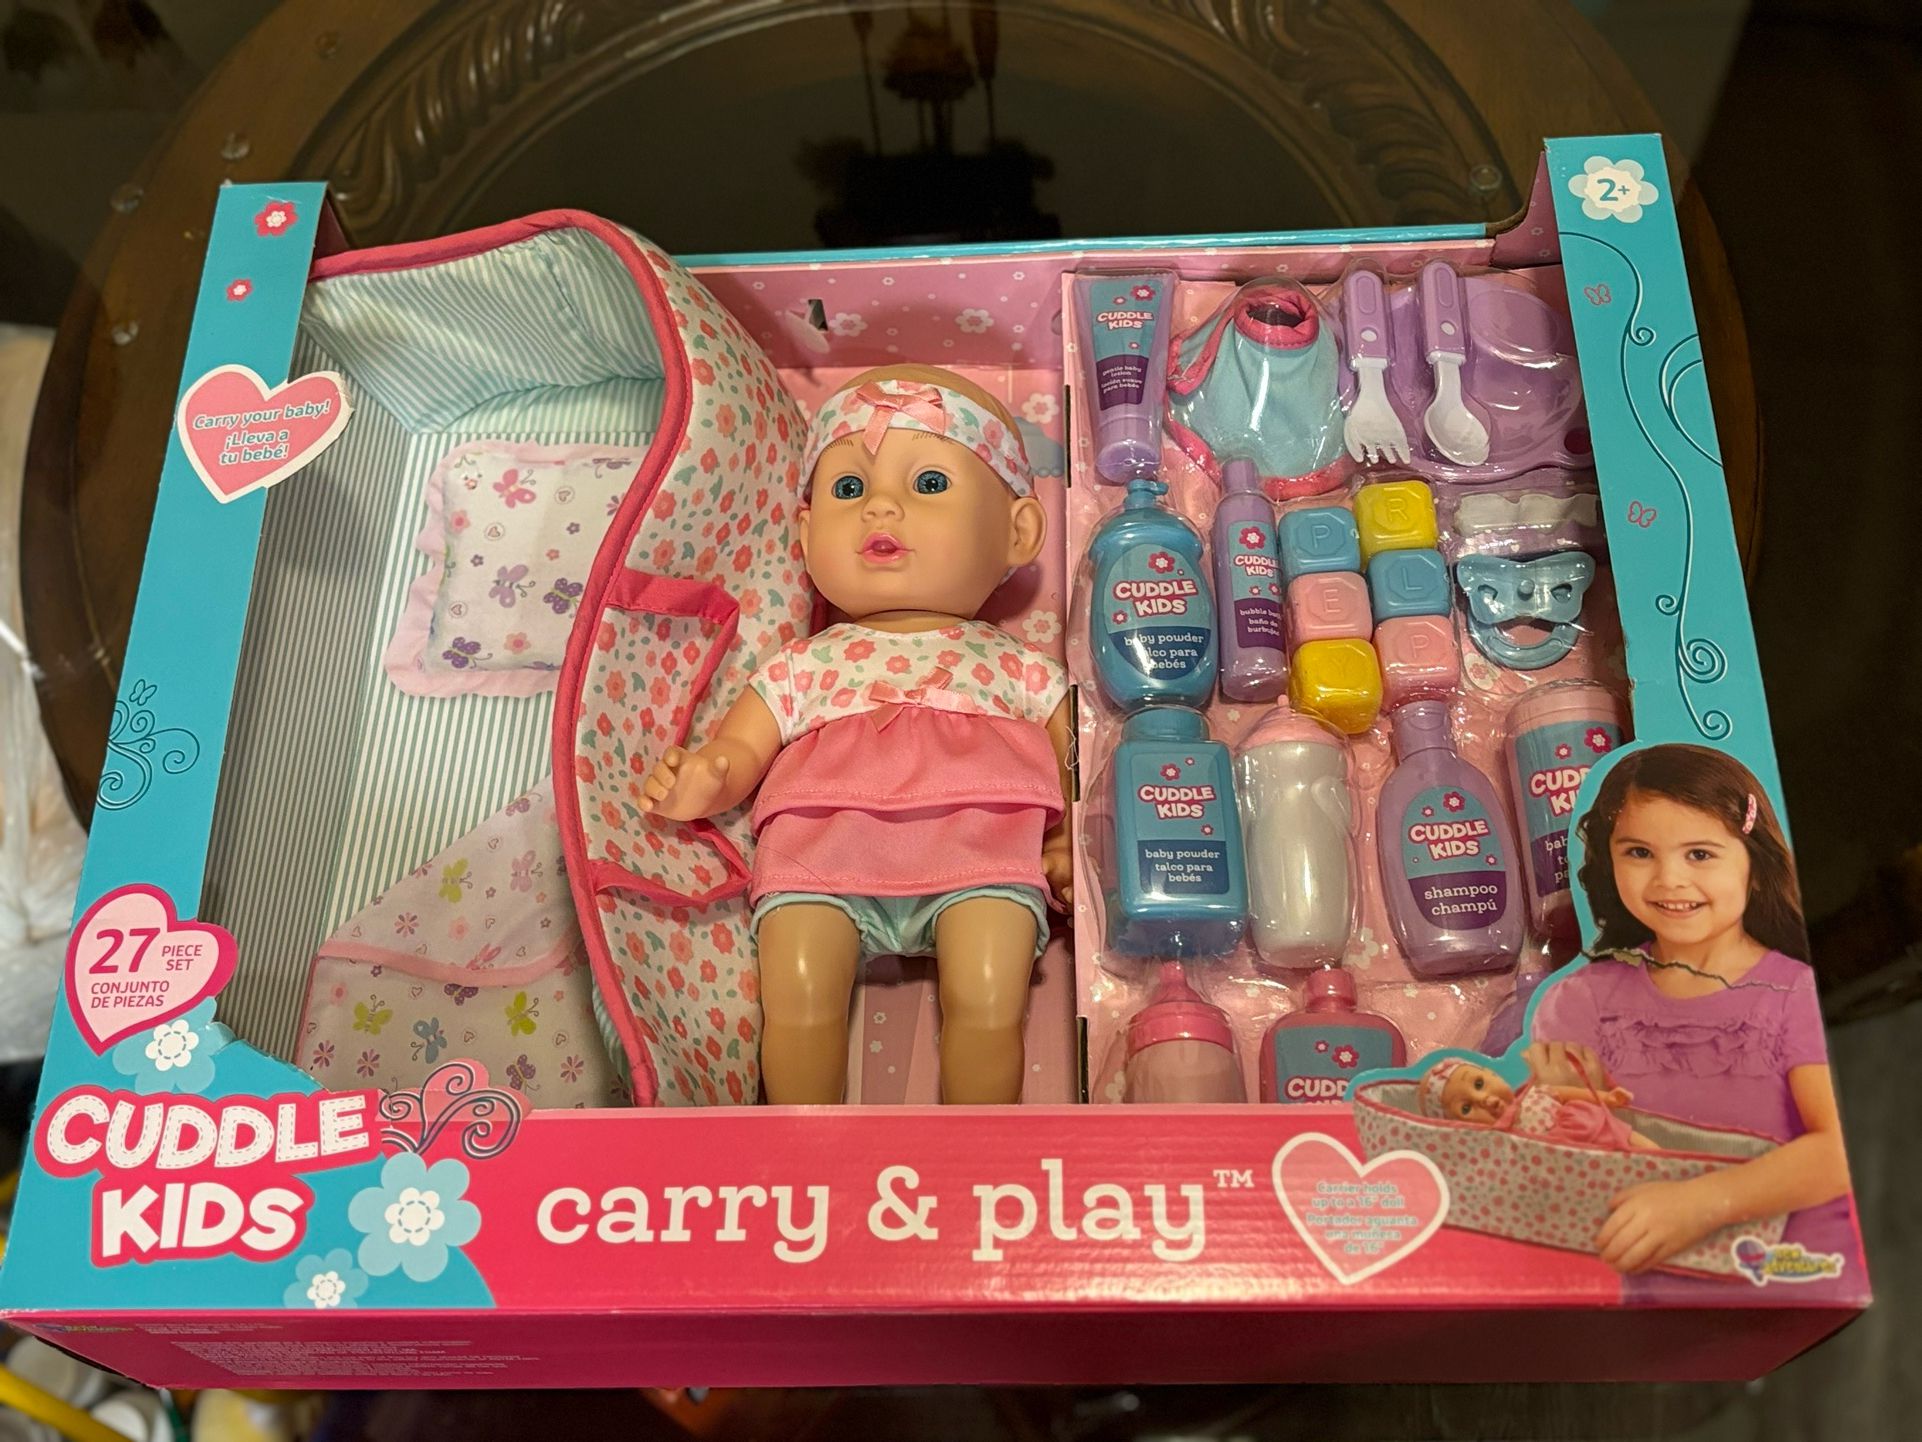 New Baby Doll Set 